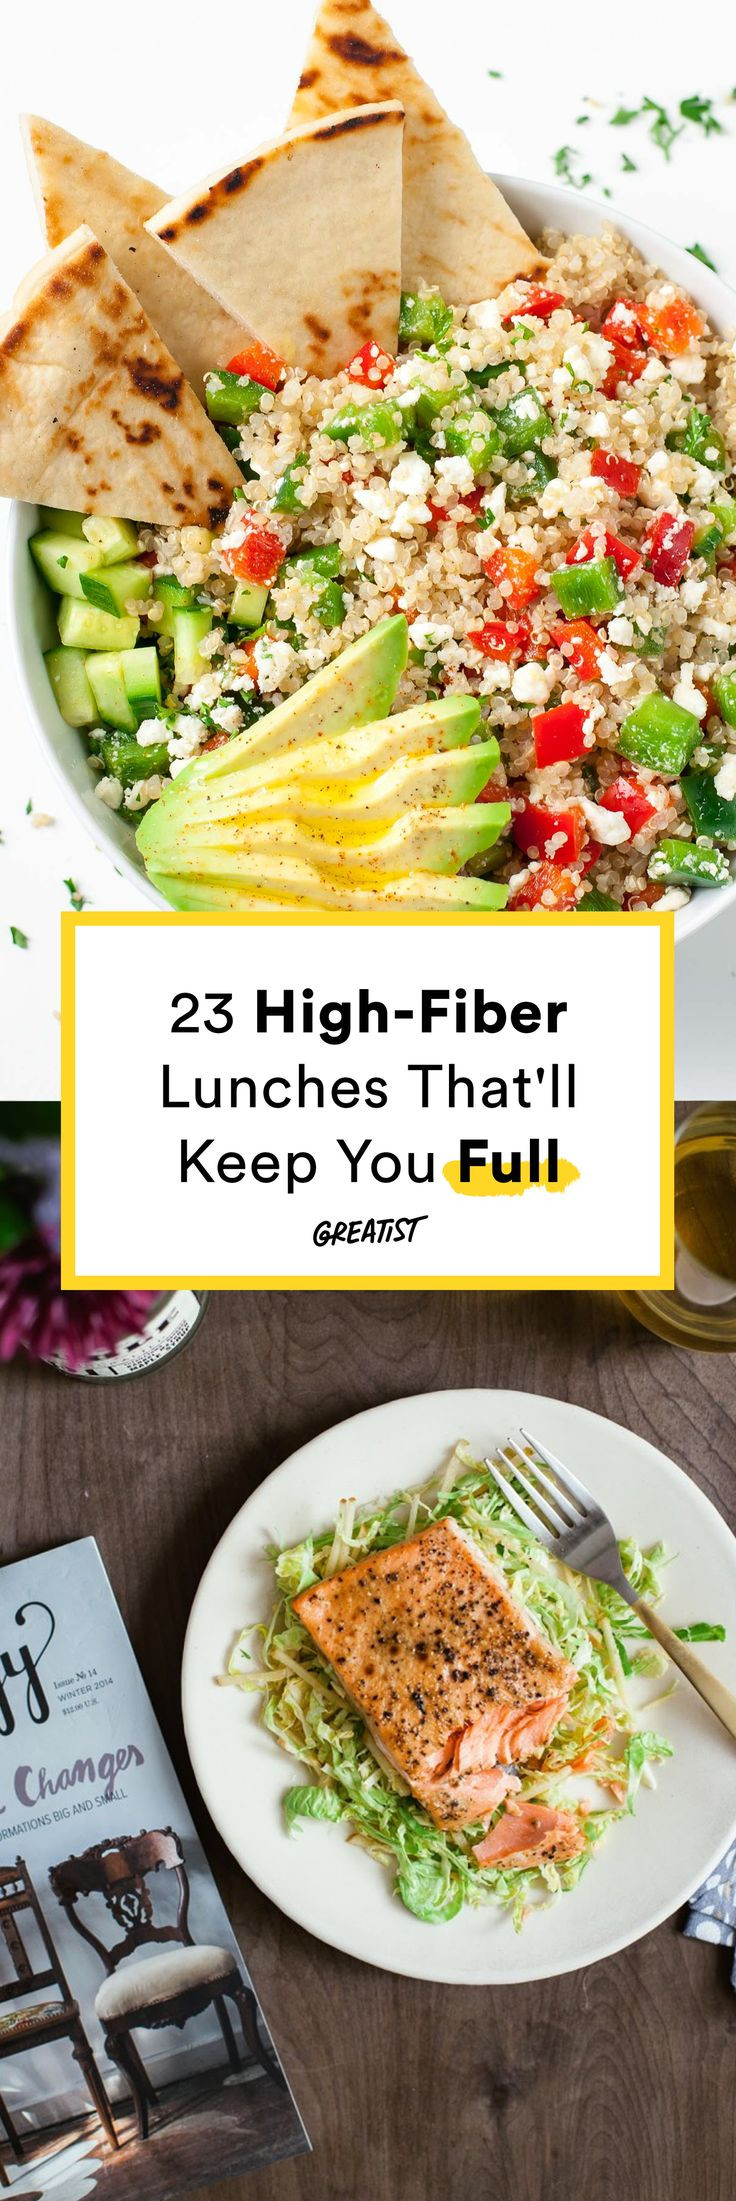 High Fiber Recipes For Dinner
 Best 20 Diverticulitis recipes ideas on Pinterest